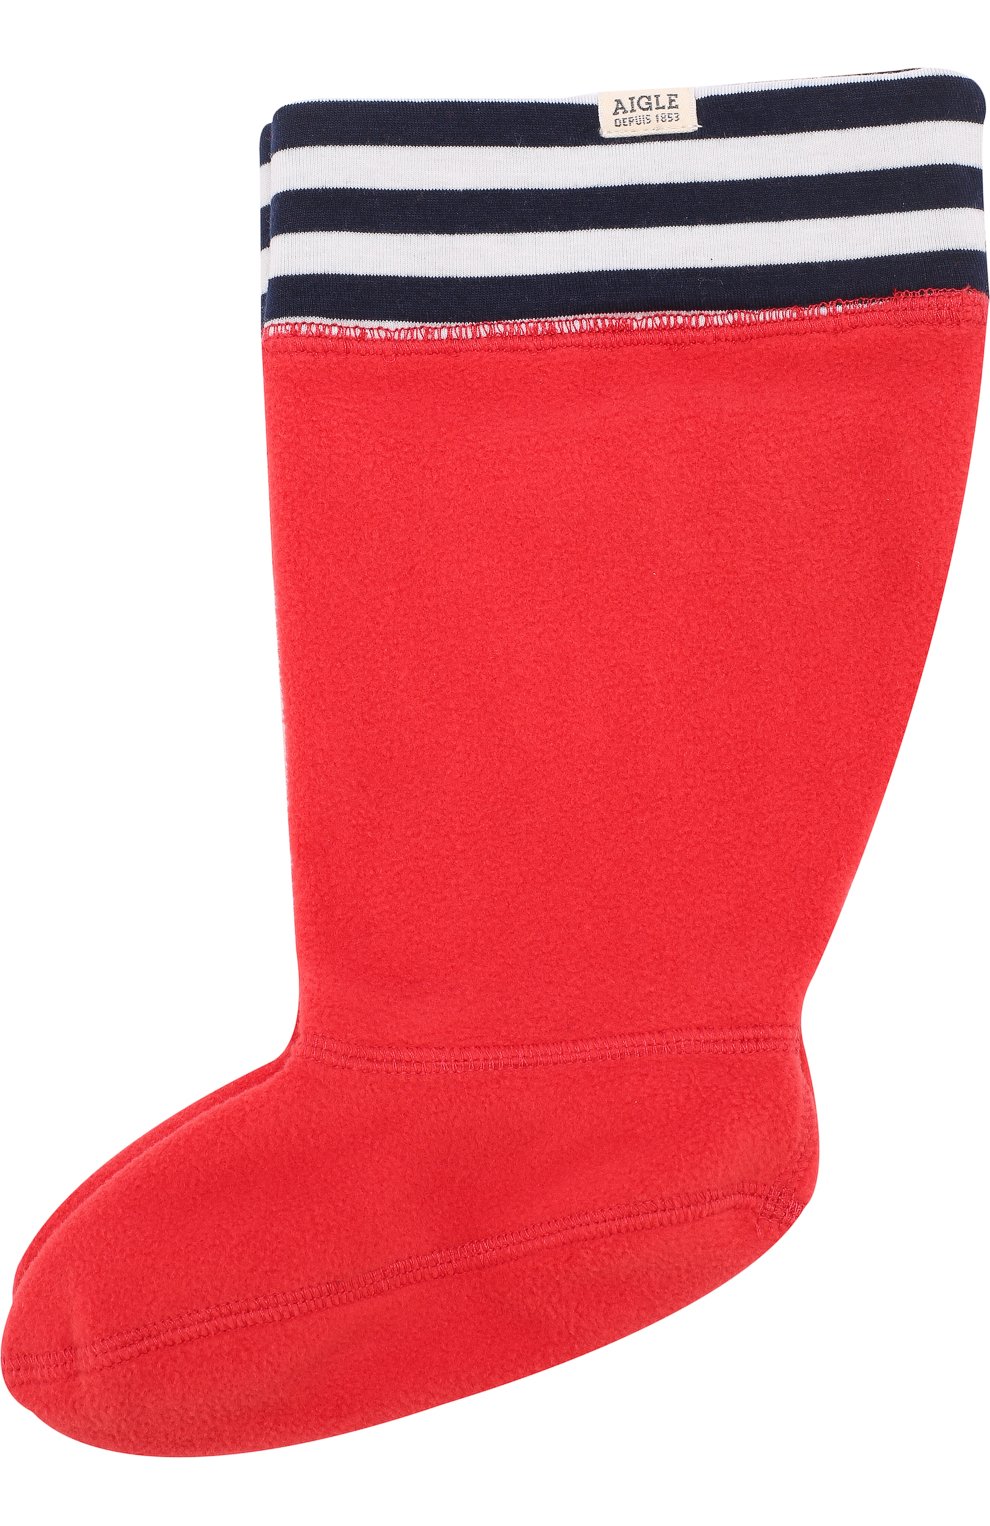 Детские носки для резиновых сапог AIGLE красного цвета, арт. D97131/L0LLYWARM | Фото 1 (Материал: Текстиль, Синтетический материал; Кросс-КТ: Носки; Статус проверки: Проверено, Проверена категория)